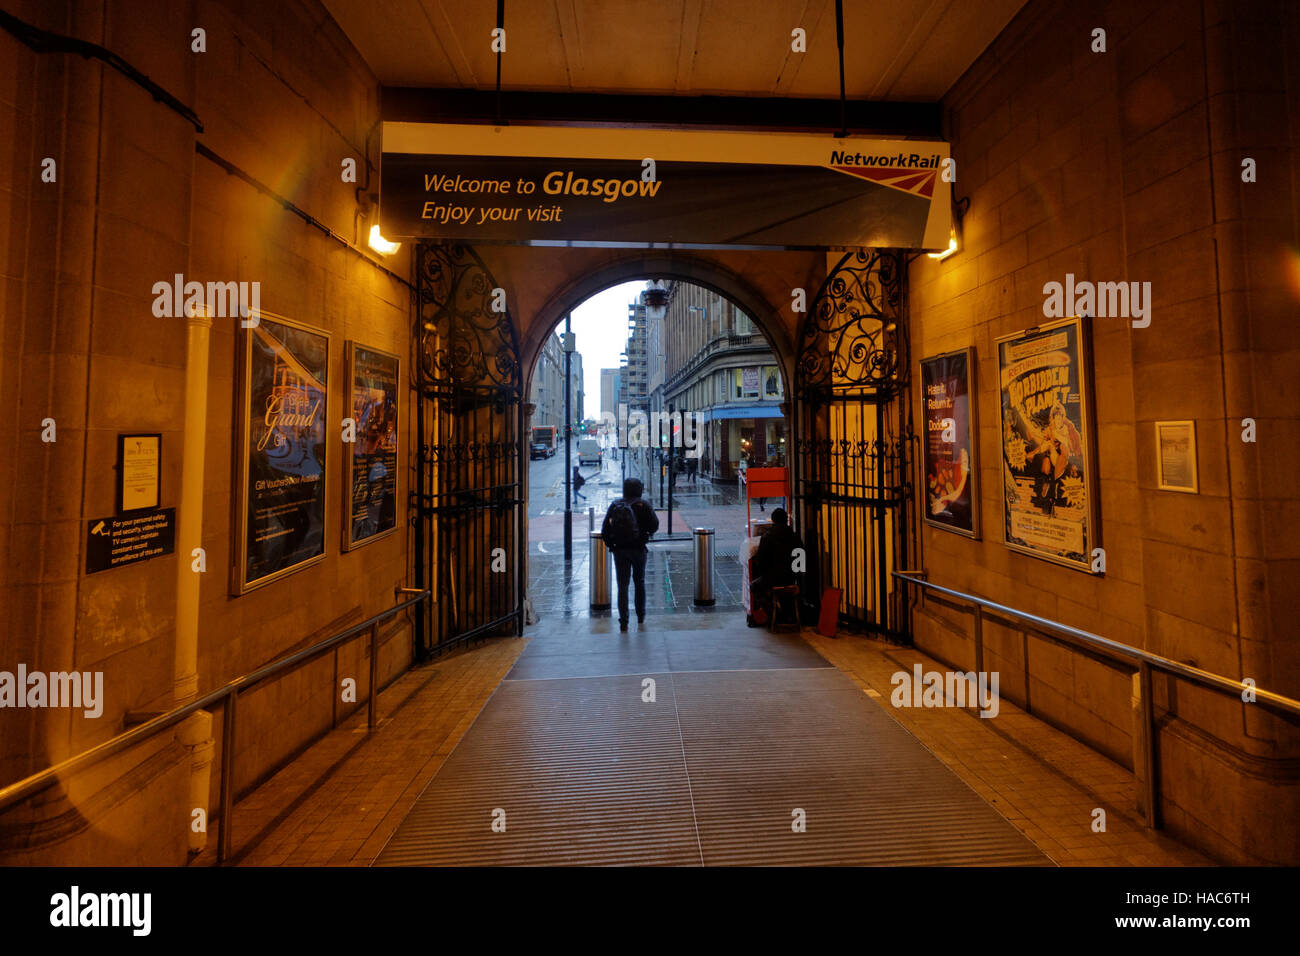 Glasgow central train station entrance Stock Photo